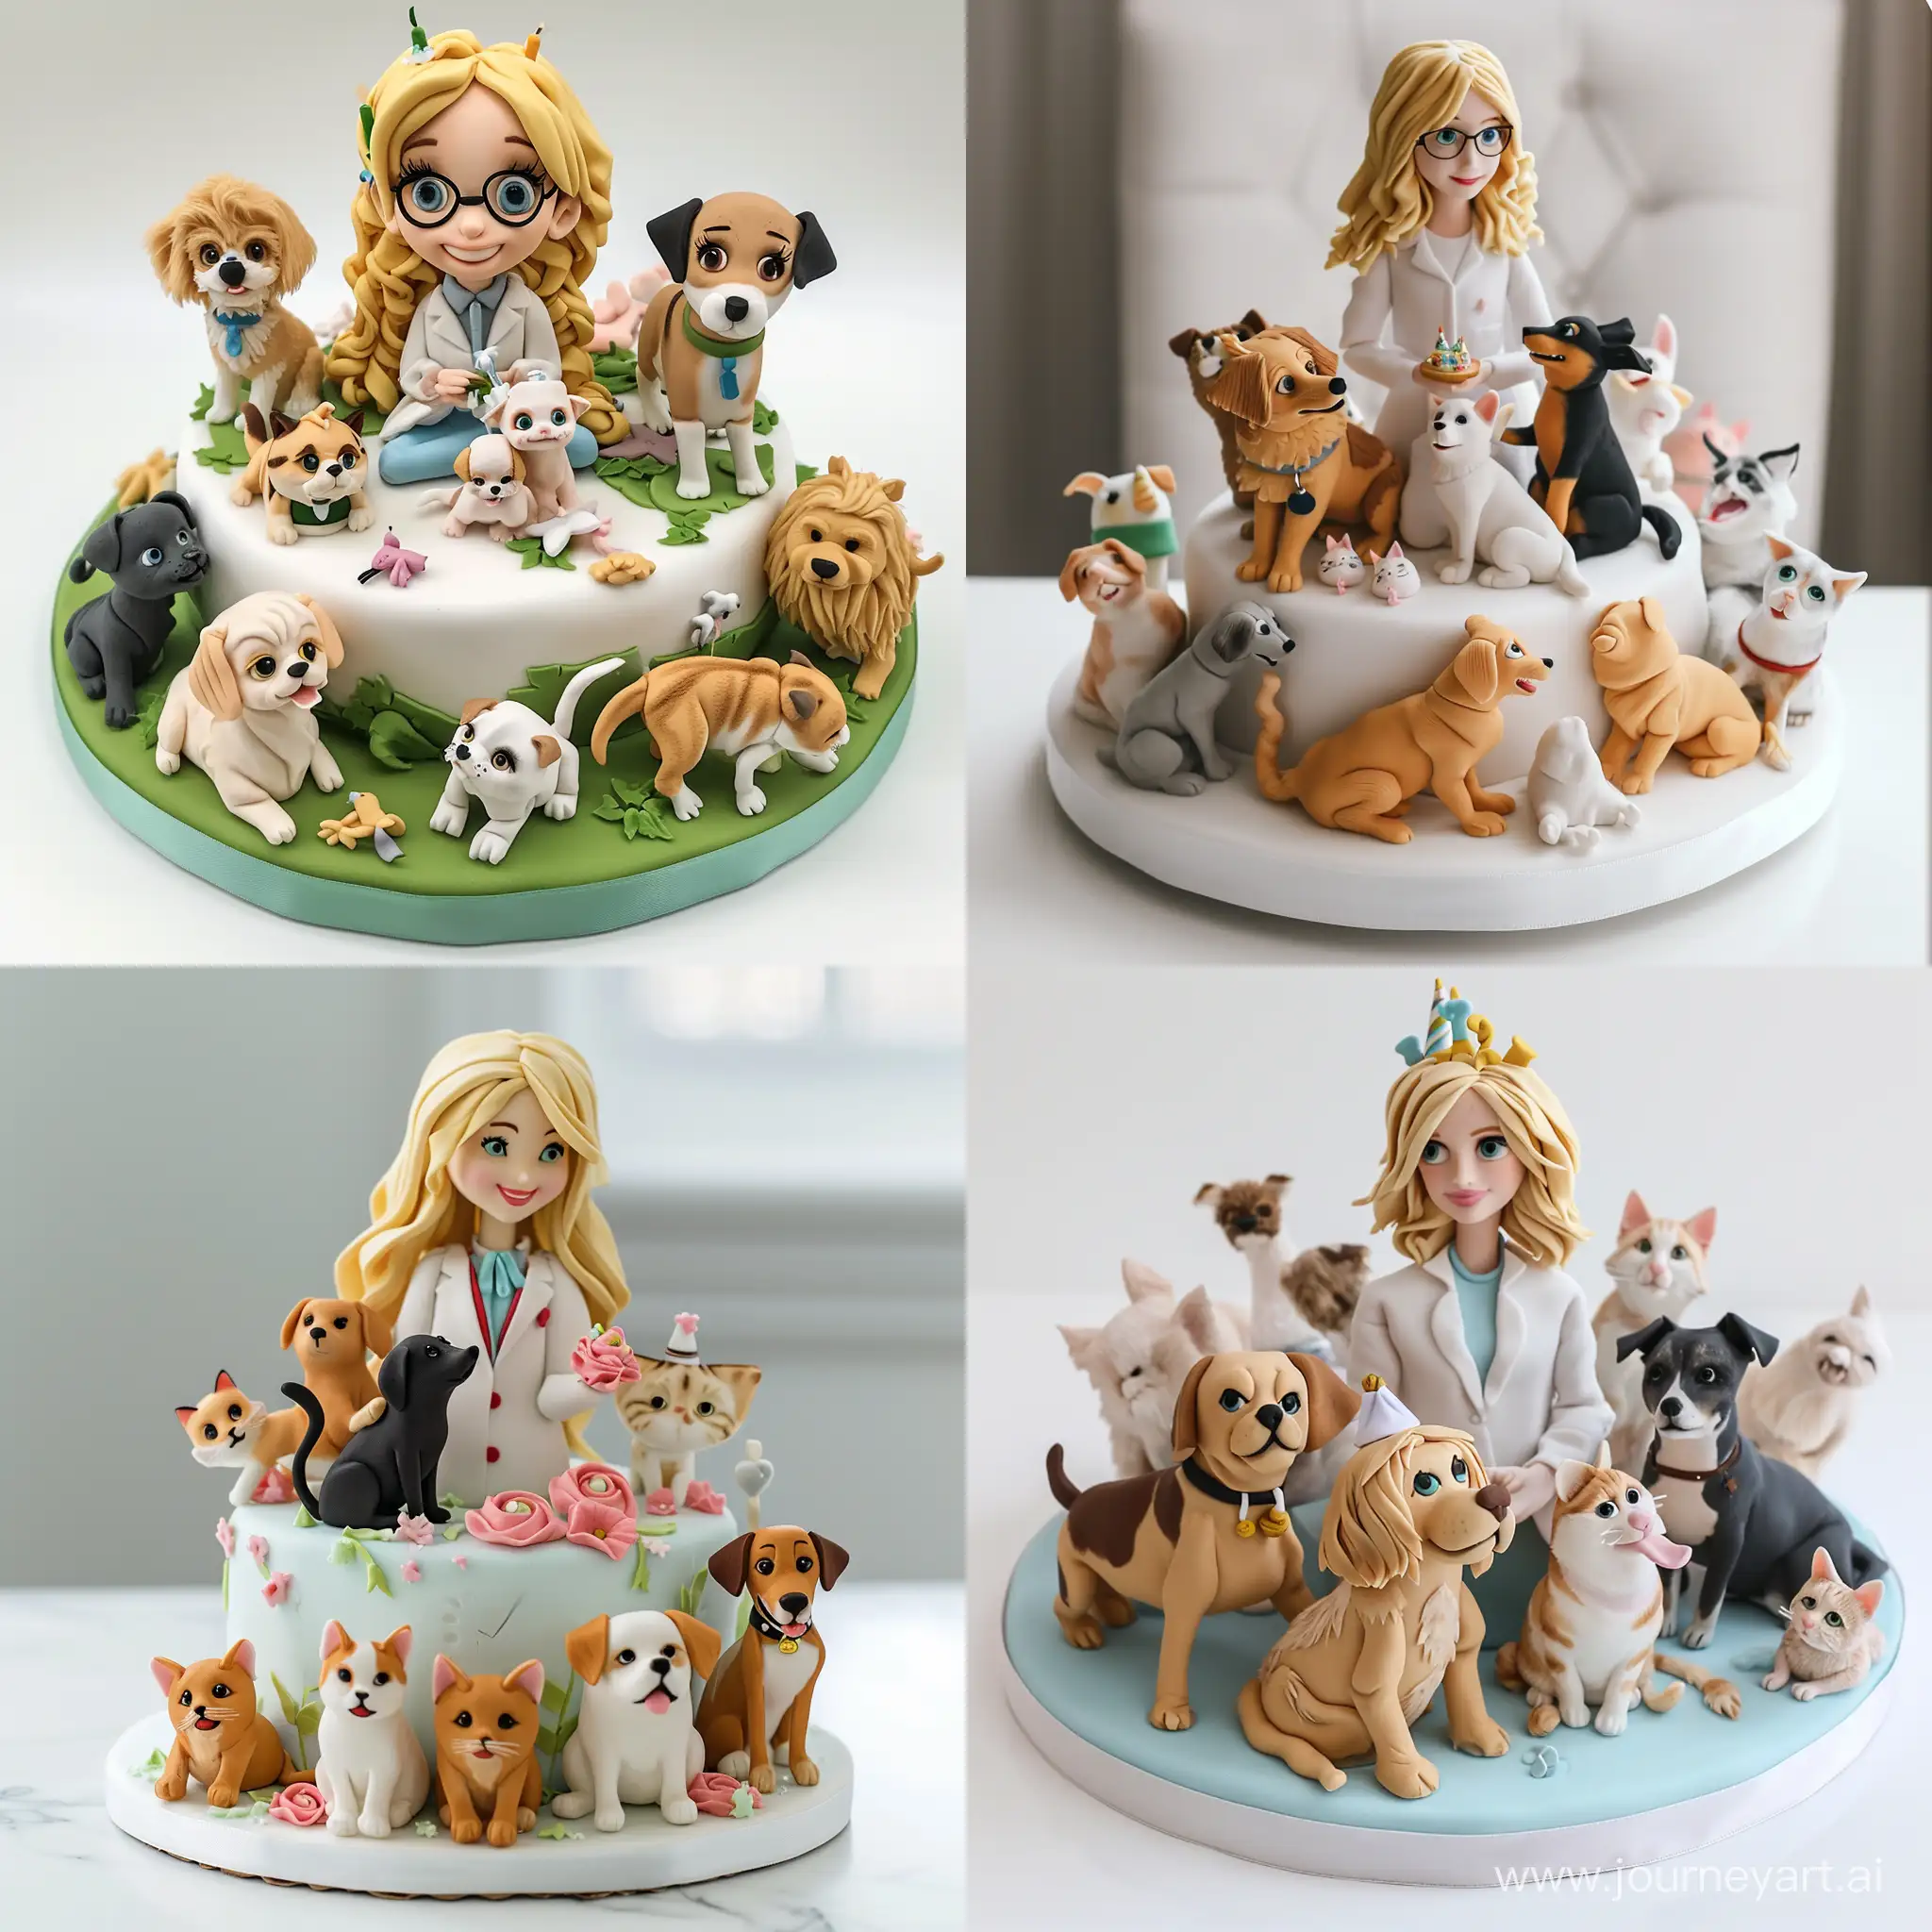 Blonde-Pharmacist-Sorina-Celebrates-Birthday-with-Pets-in-Whimsical-Cake-Scene